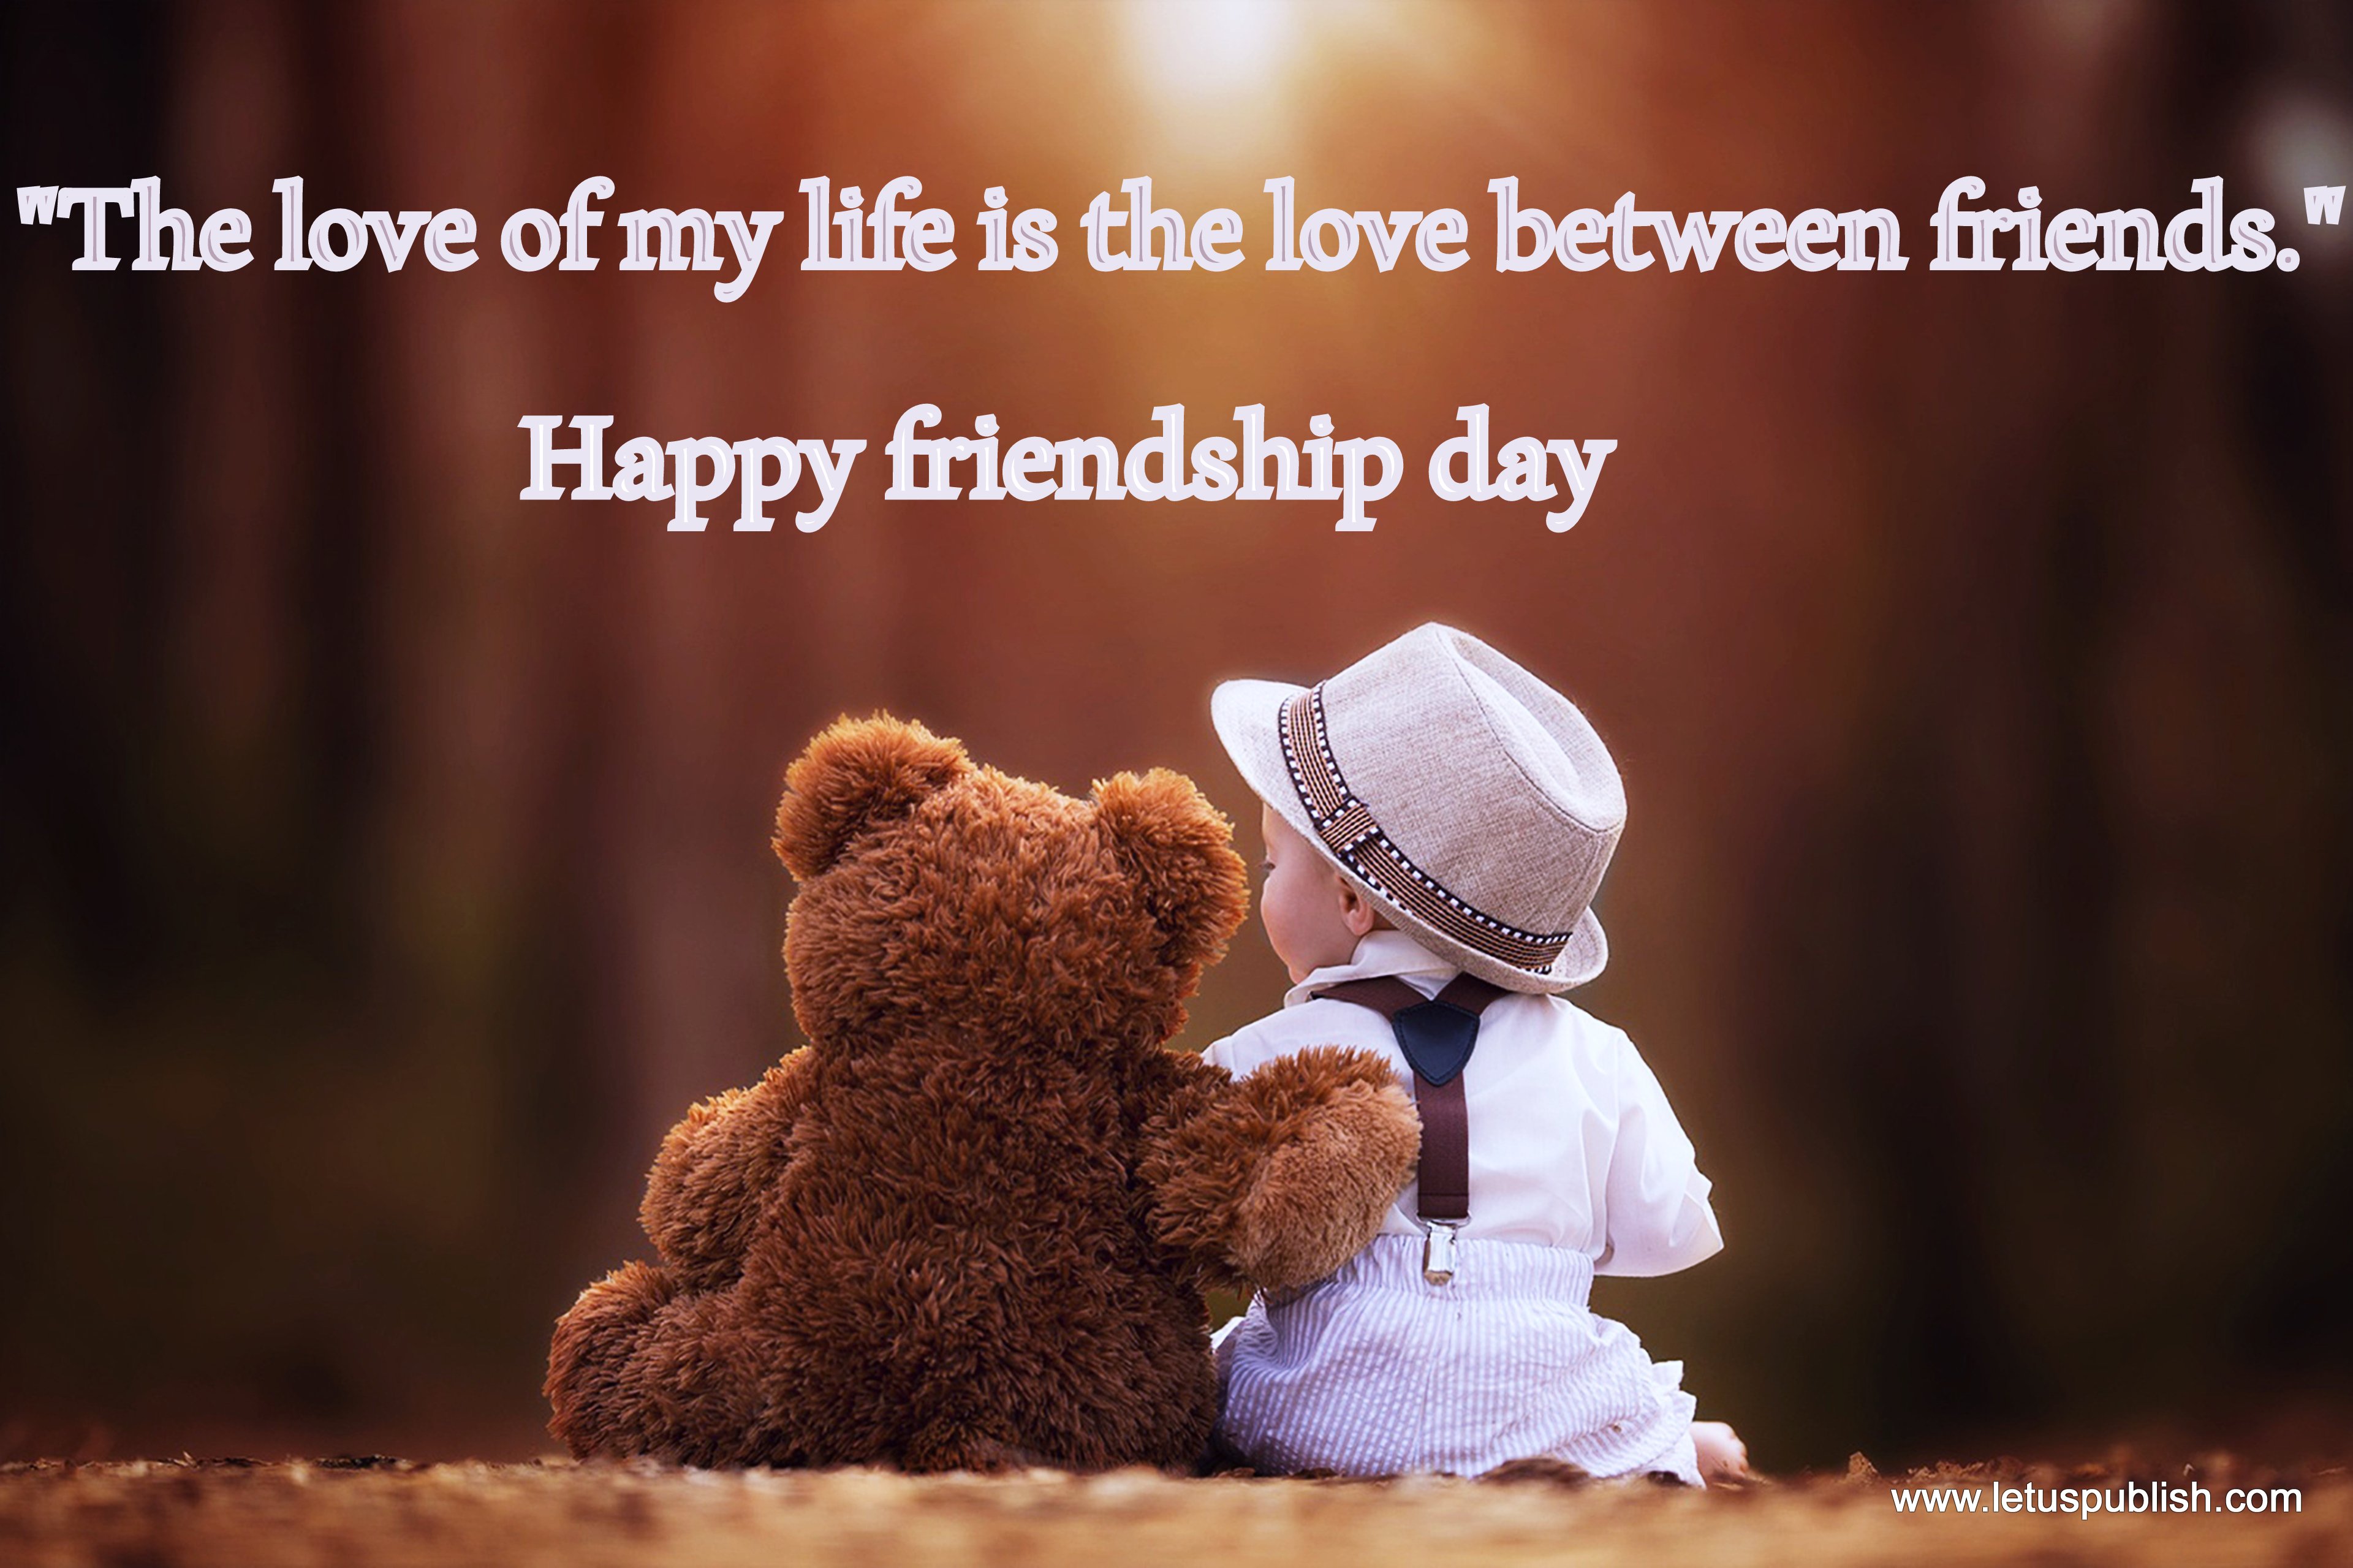 happy friendship day wallpaper,teddy bear,love,friendship,text,adaptation